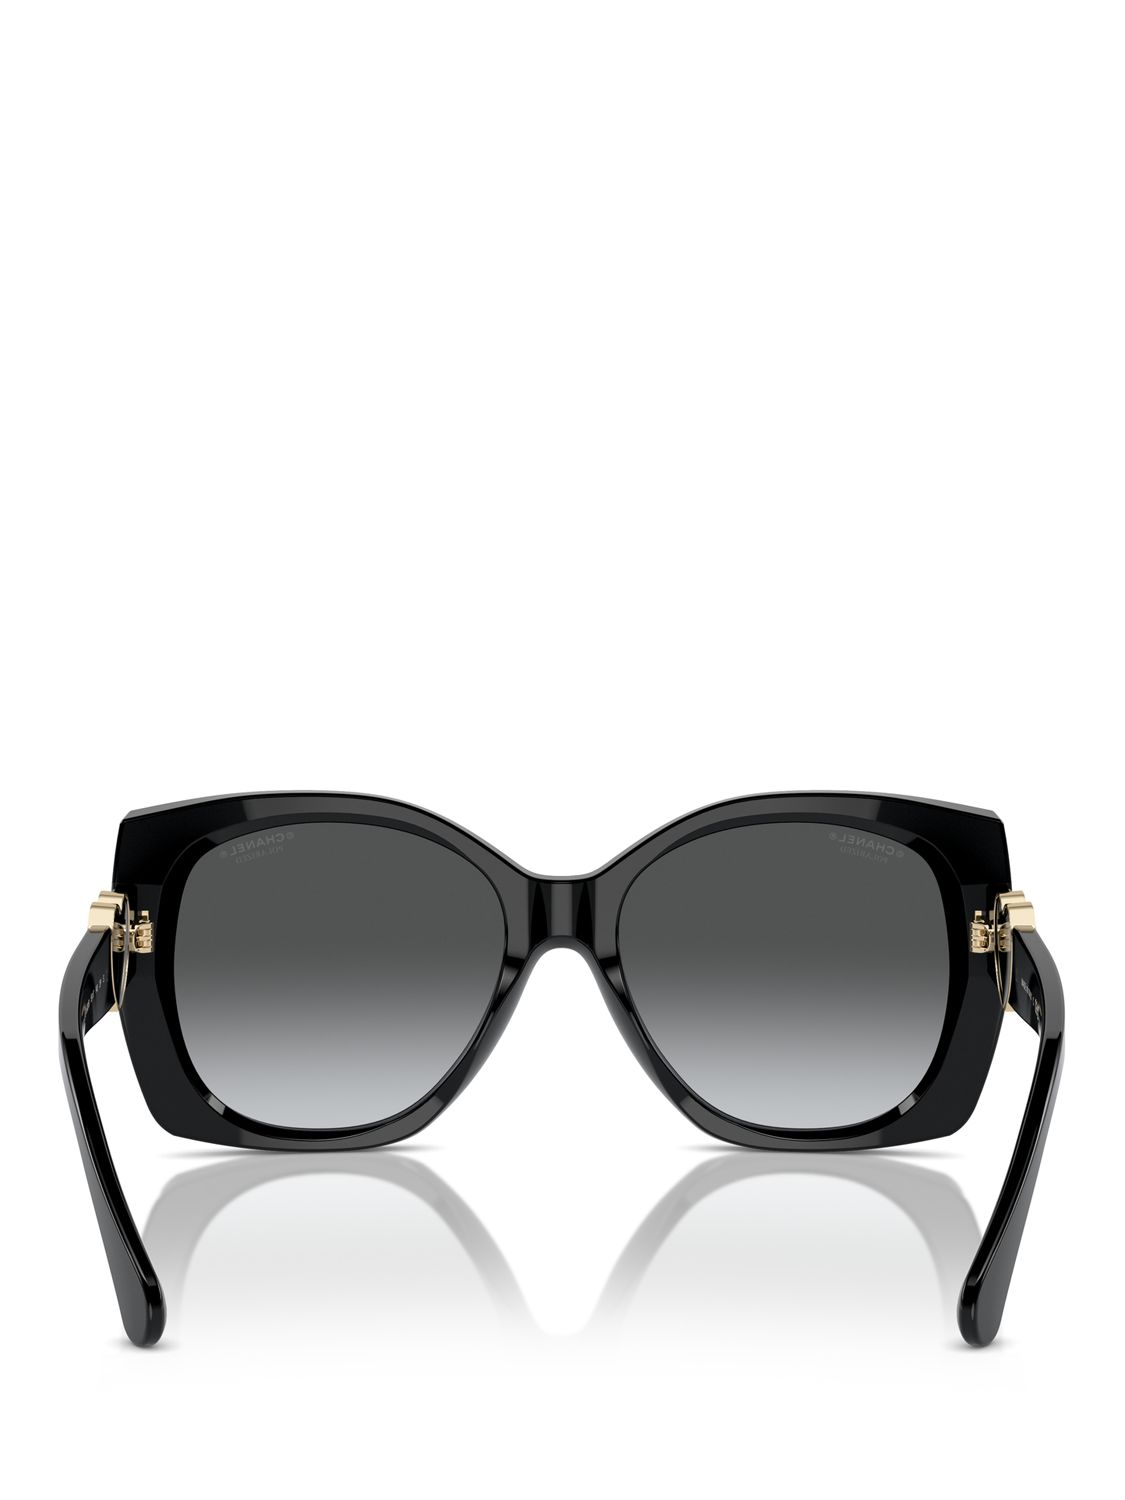 Buy CHANEL Square Sunglasses CH5519 Black/Grey Gradient Online at johnlewis.com